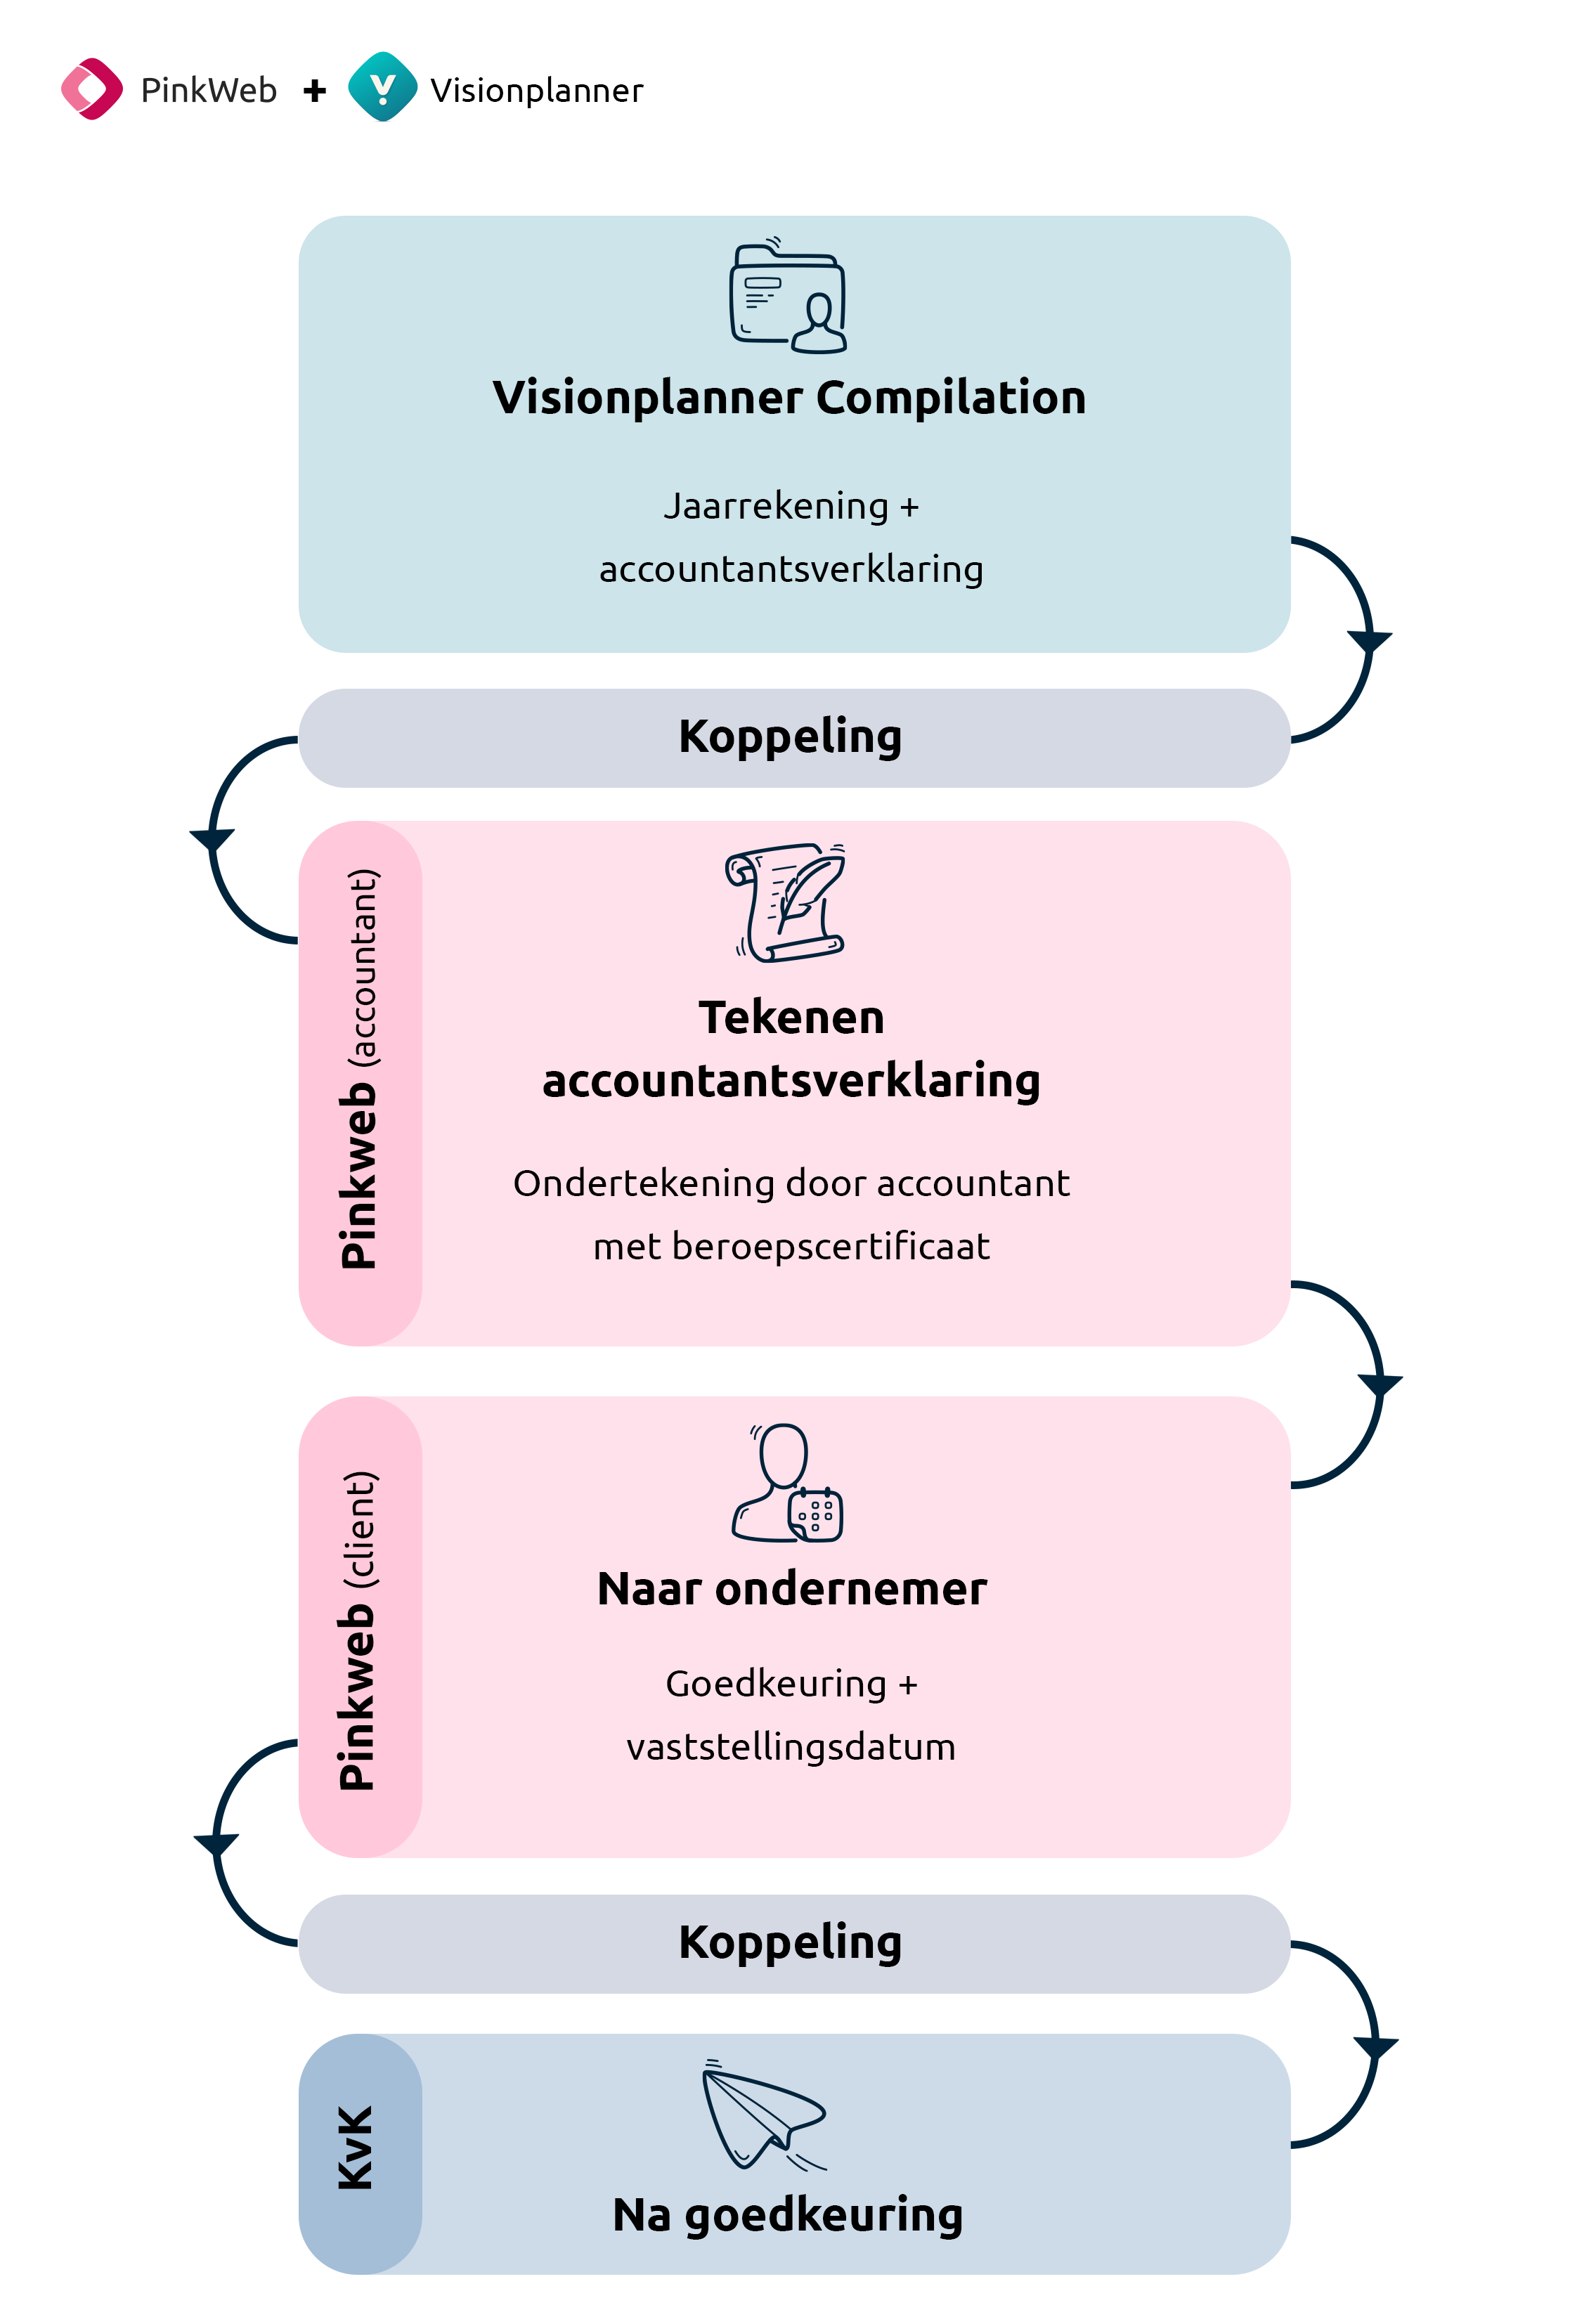 Visionplanner Compilation proces naar PinkWeb ondertekening